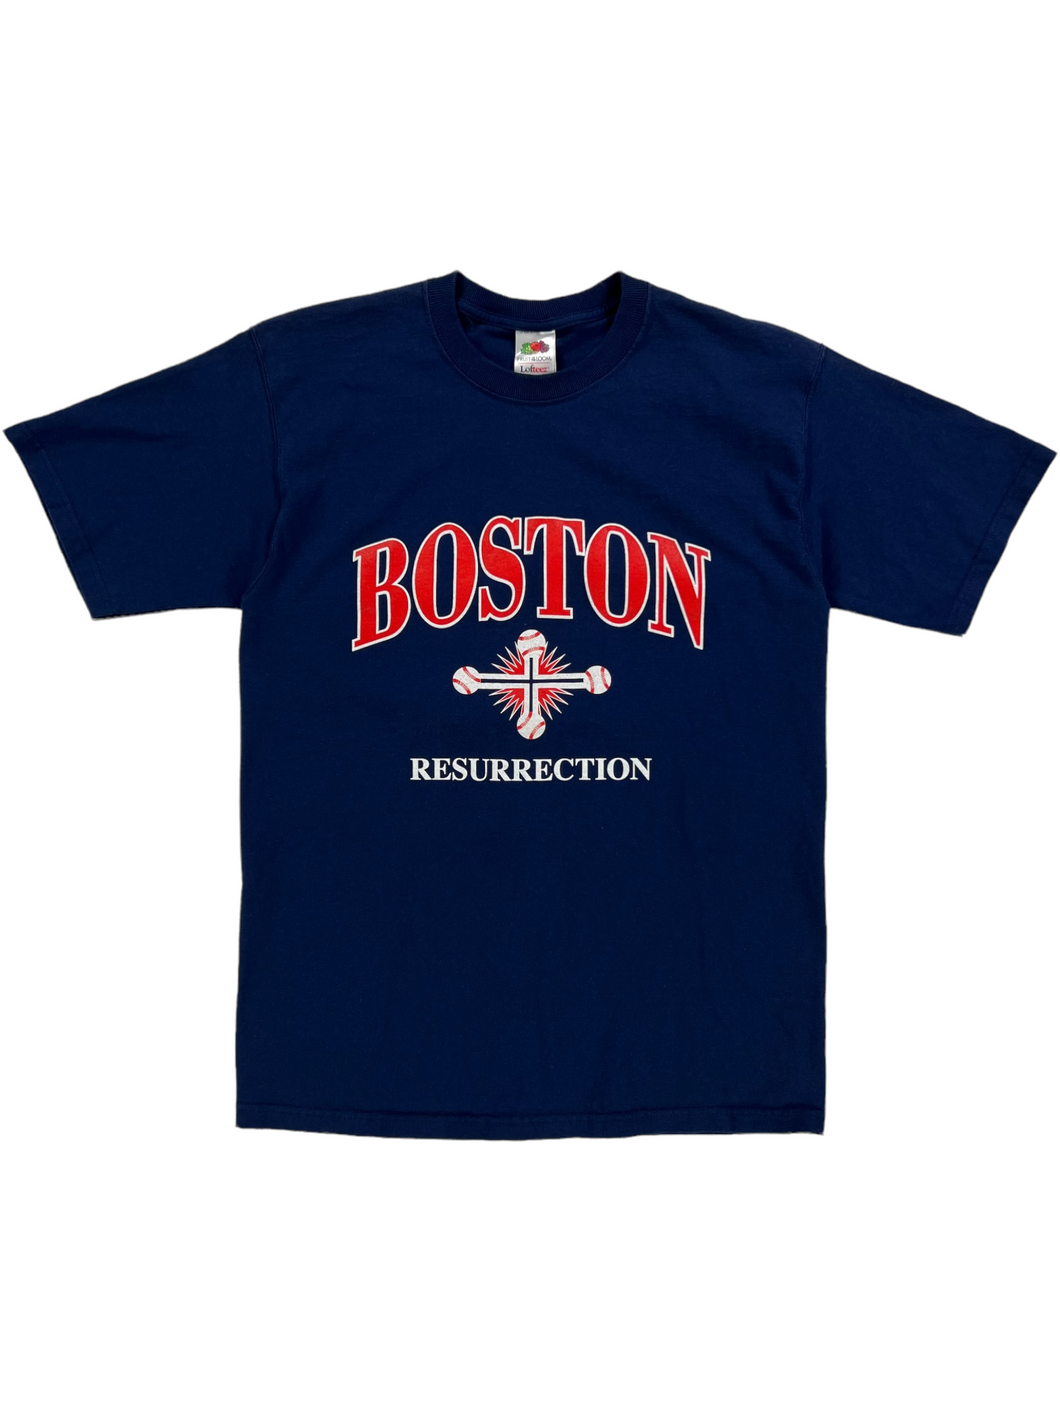 Vintage 2004 Boston Red Sox reverse the curse resurrection tour tee (M)